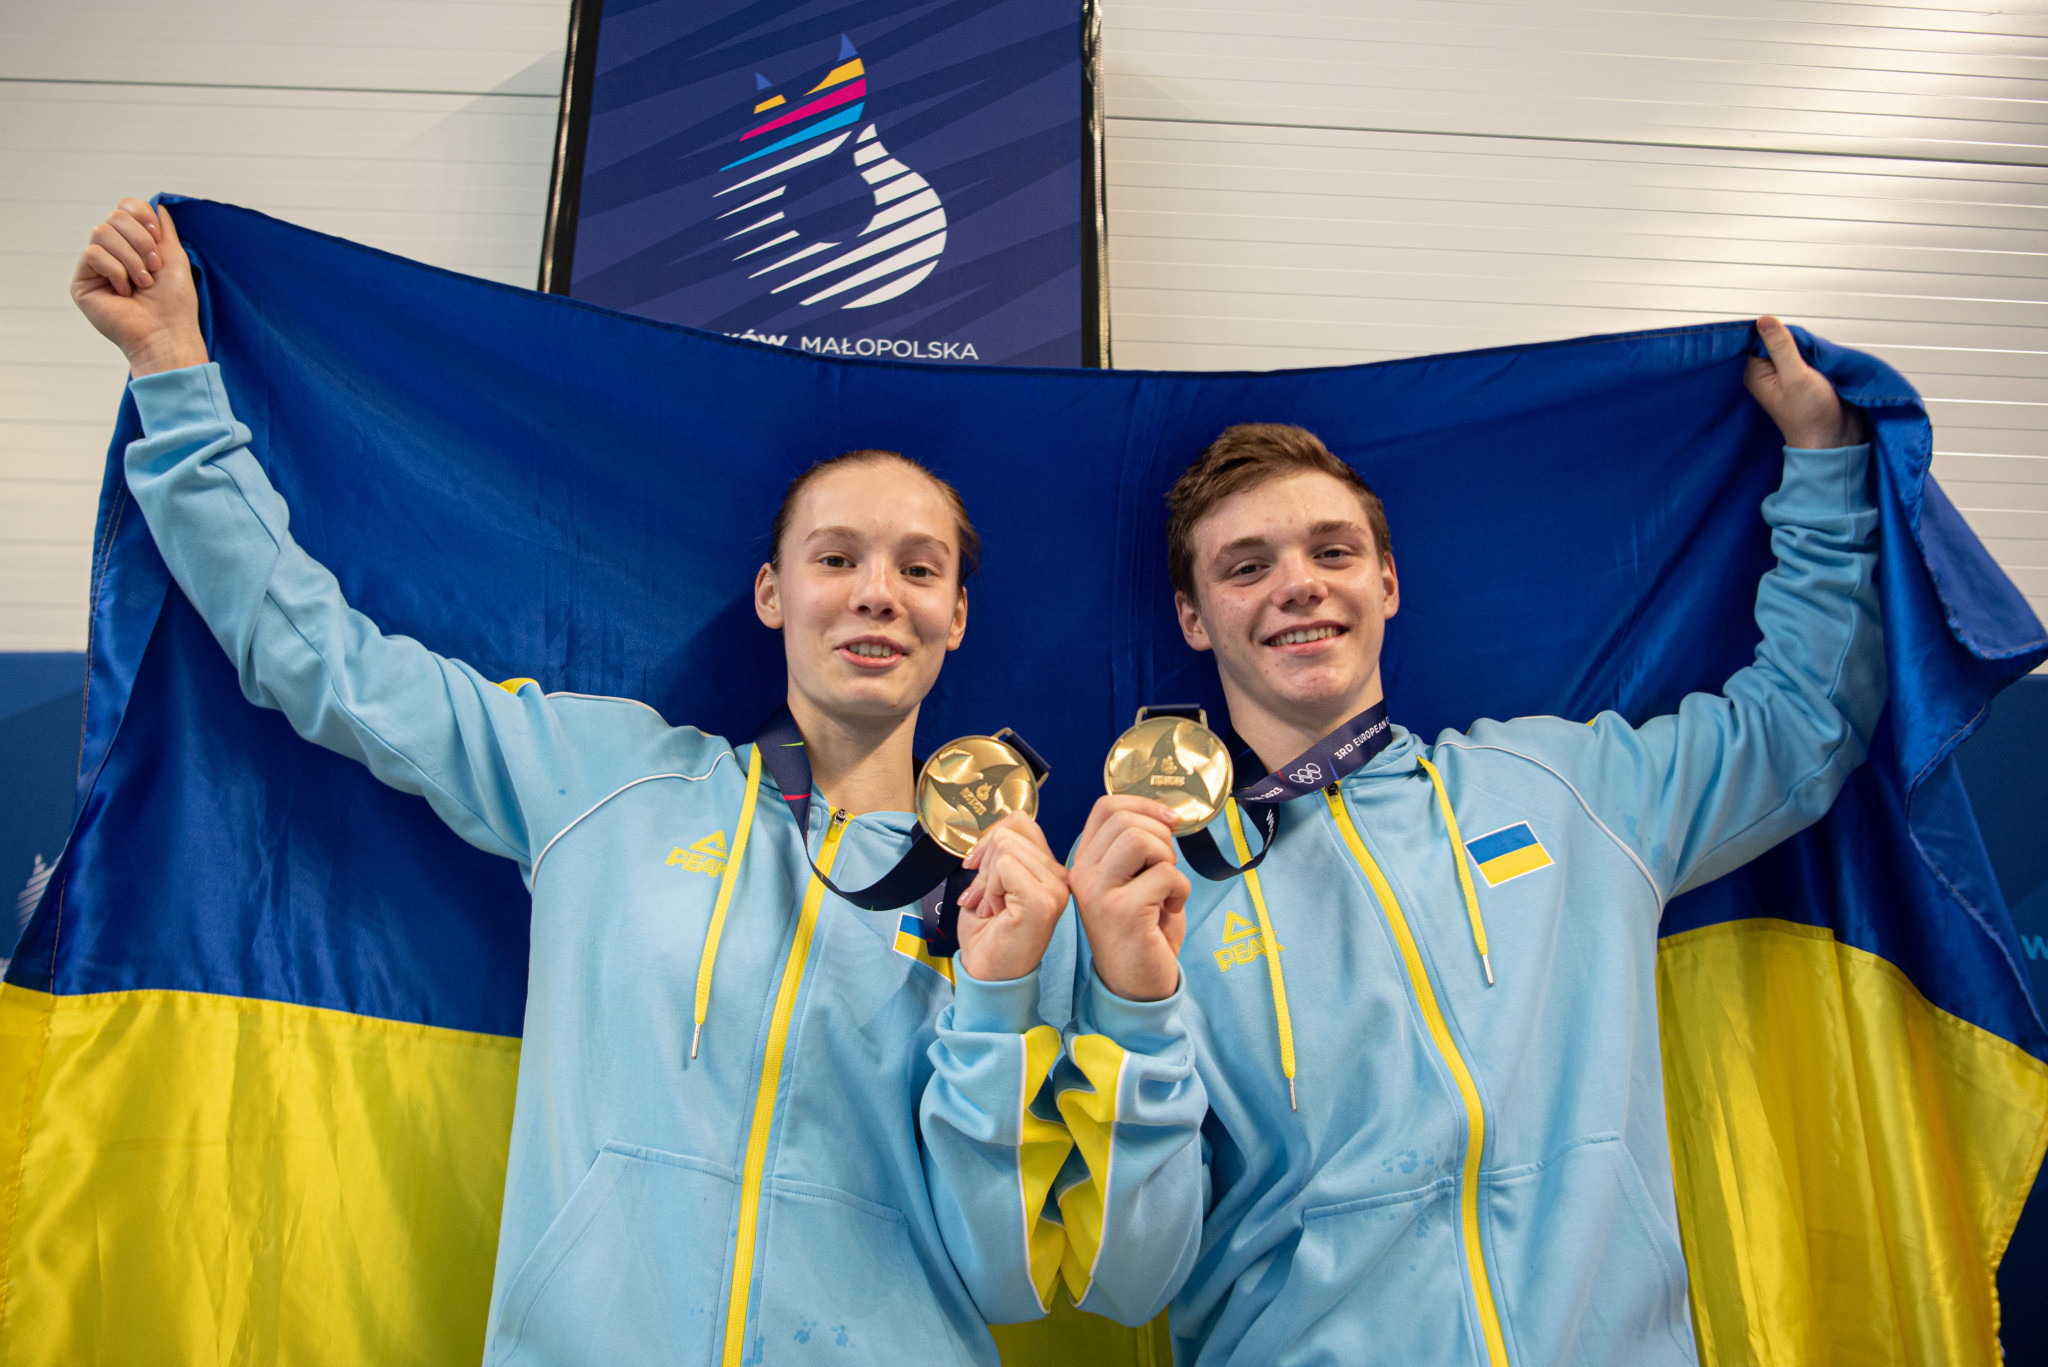 Kirill Boliukh, right, and Kseniia Bailo, left, of Ukraine dominated the mixed 10m synchronised platform diving final ©Kraków-Małopolska 2023